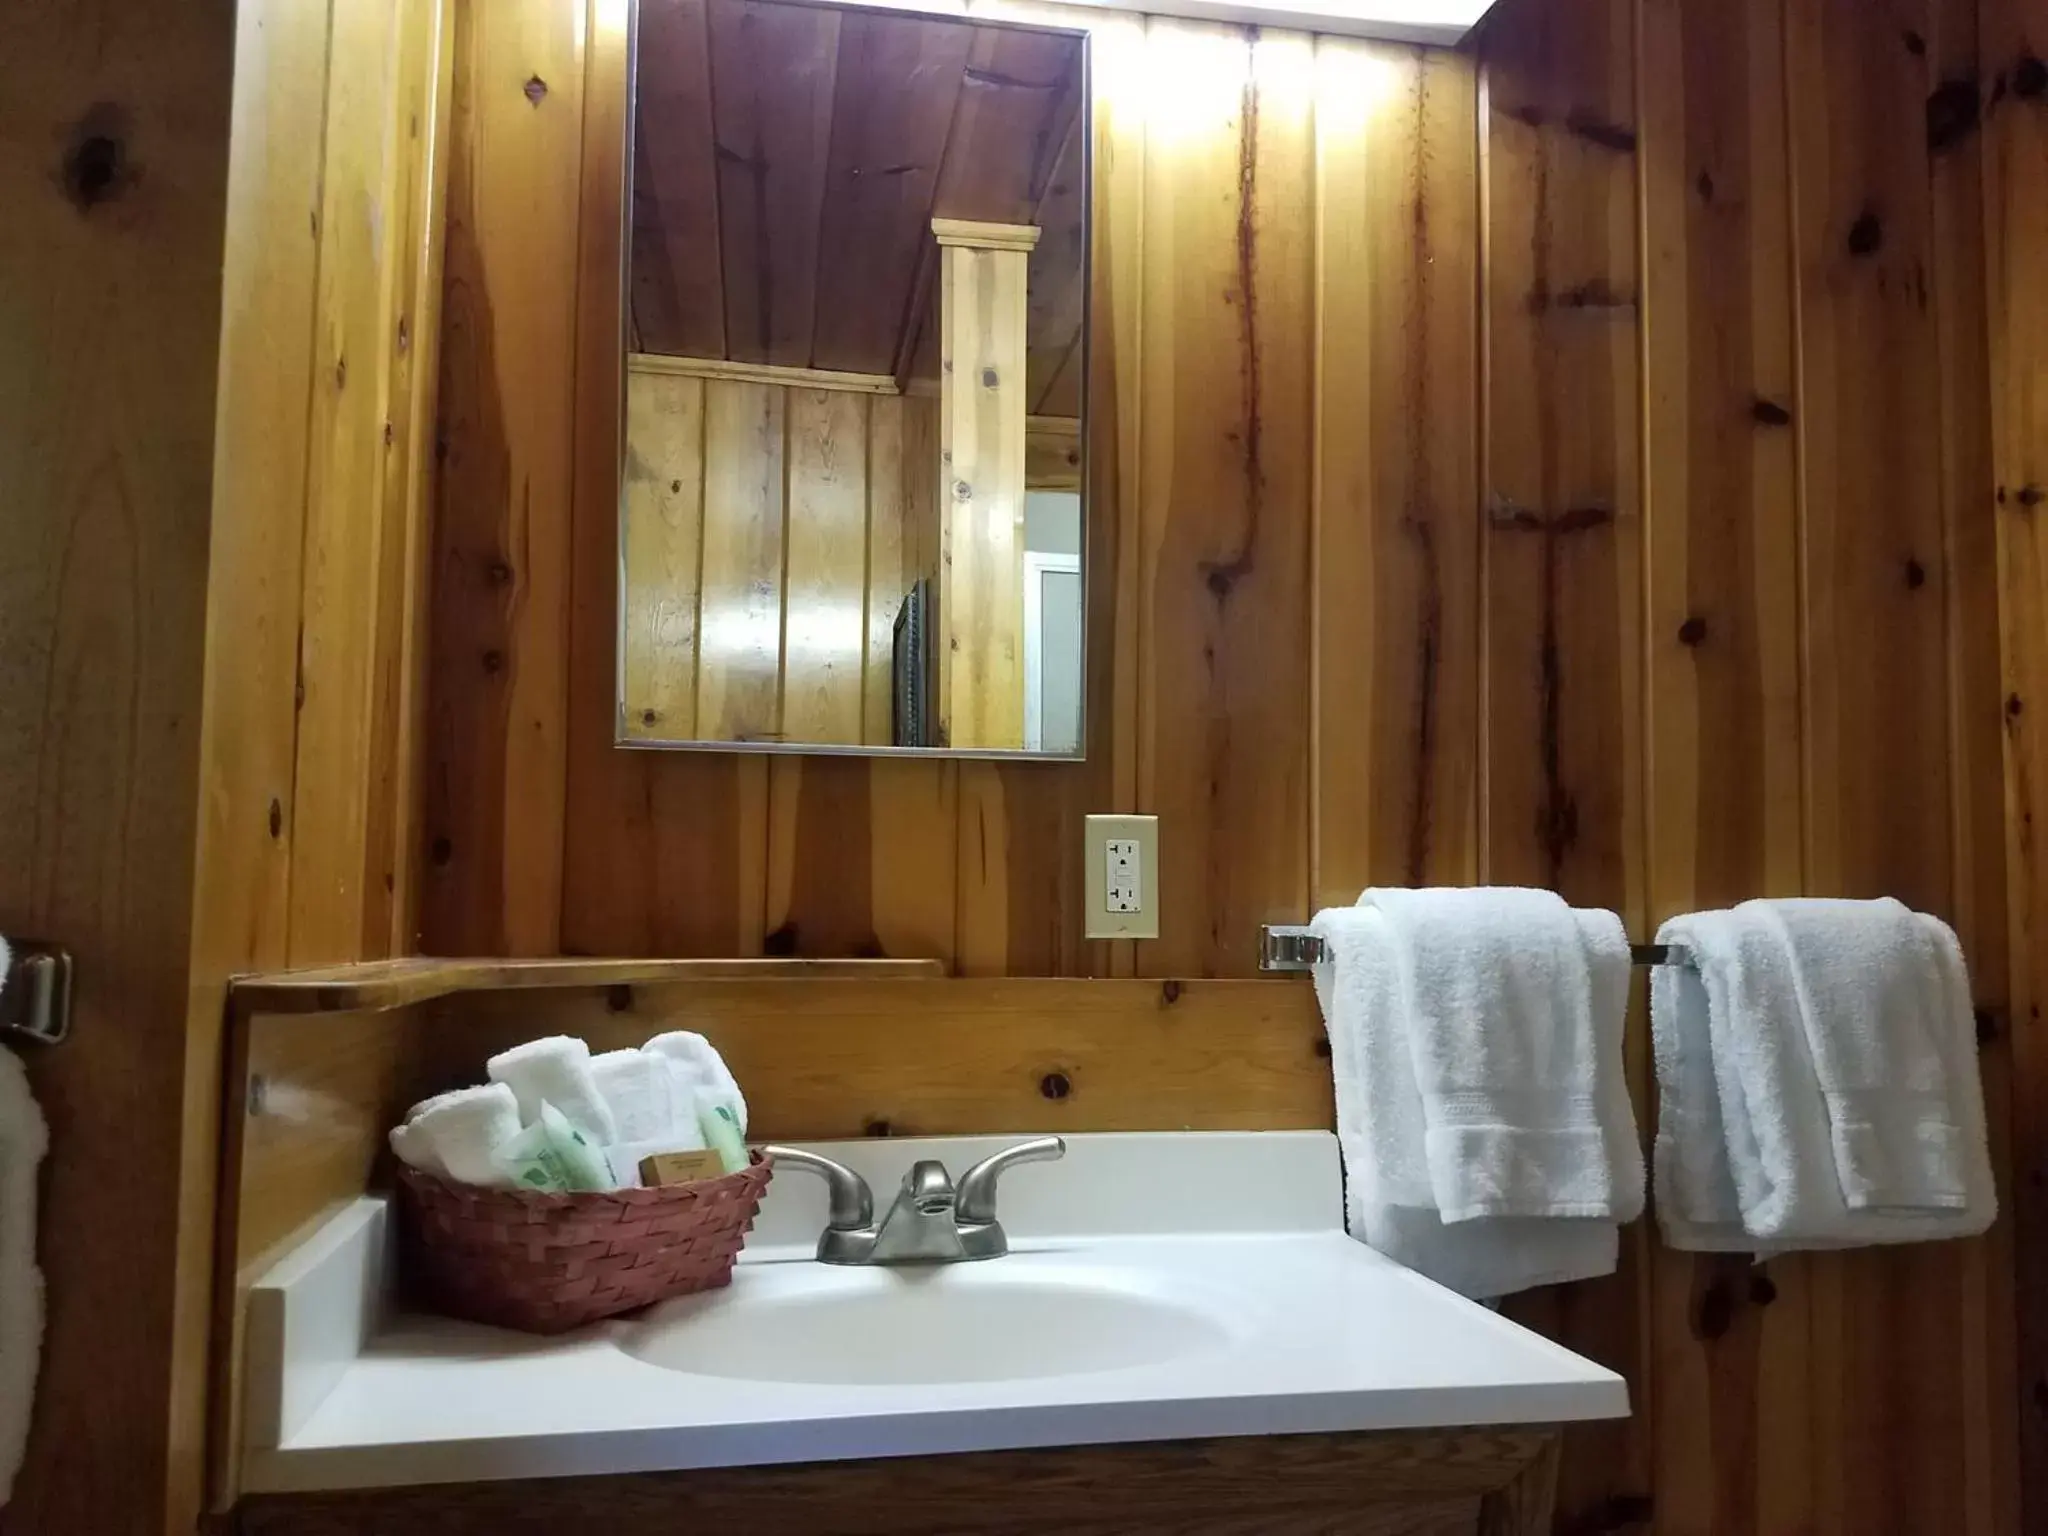 Bathroom in Fern River Resort